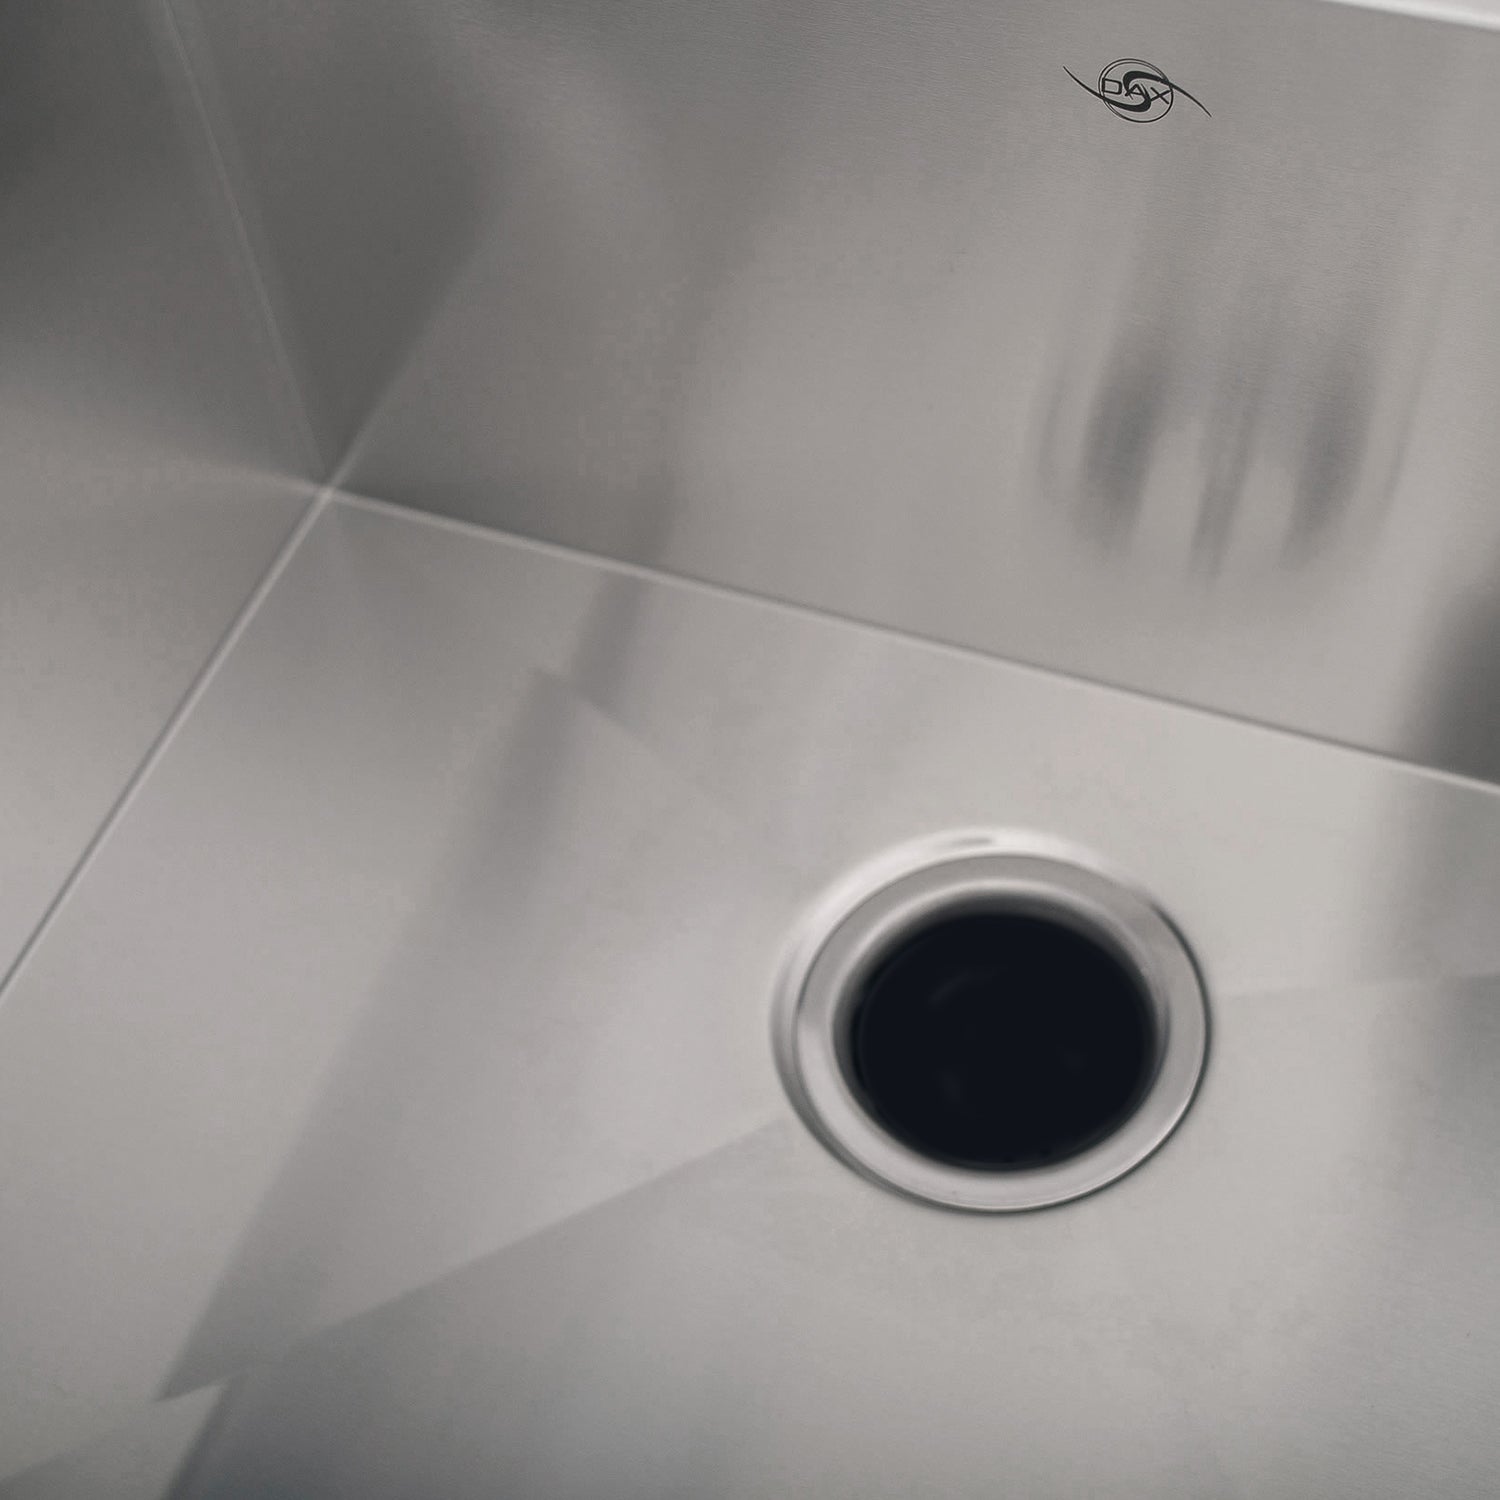 DAX Handmade Single Bowl Undermount Kitchen Sink, 16 Gauge Stainless Steel, Brushed Finish, 23 x 18 x 10 Inches (DAX-SQ-2318)